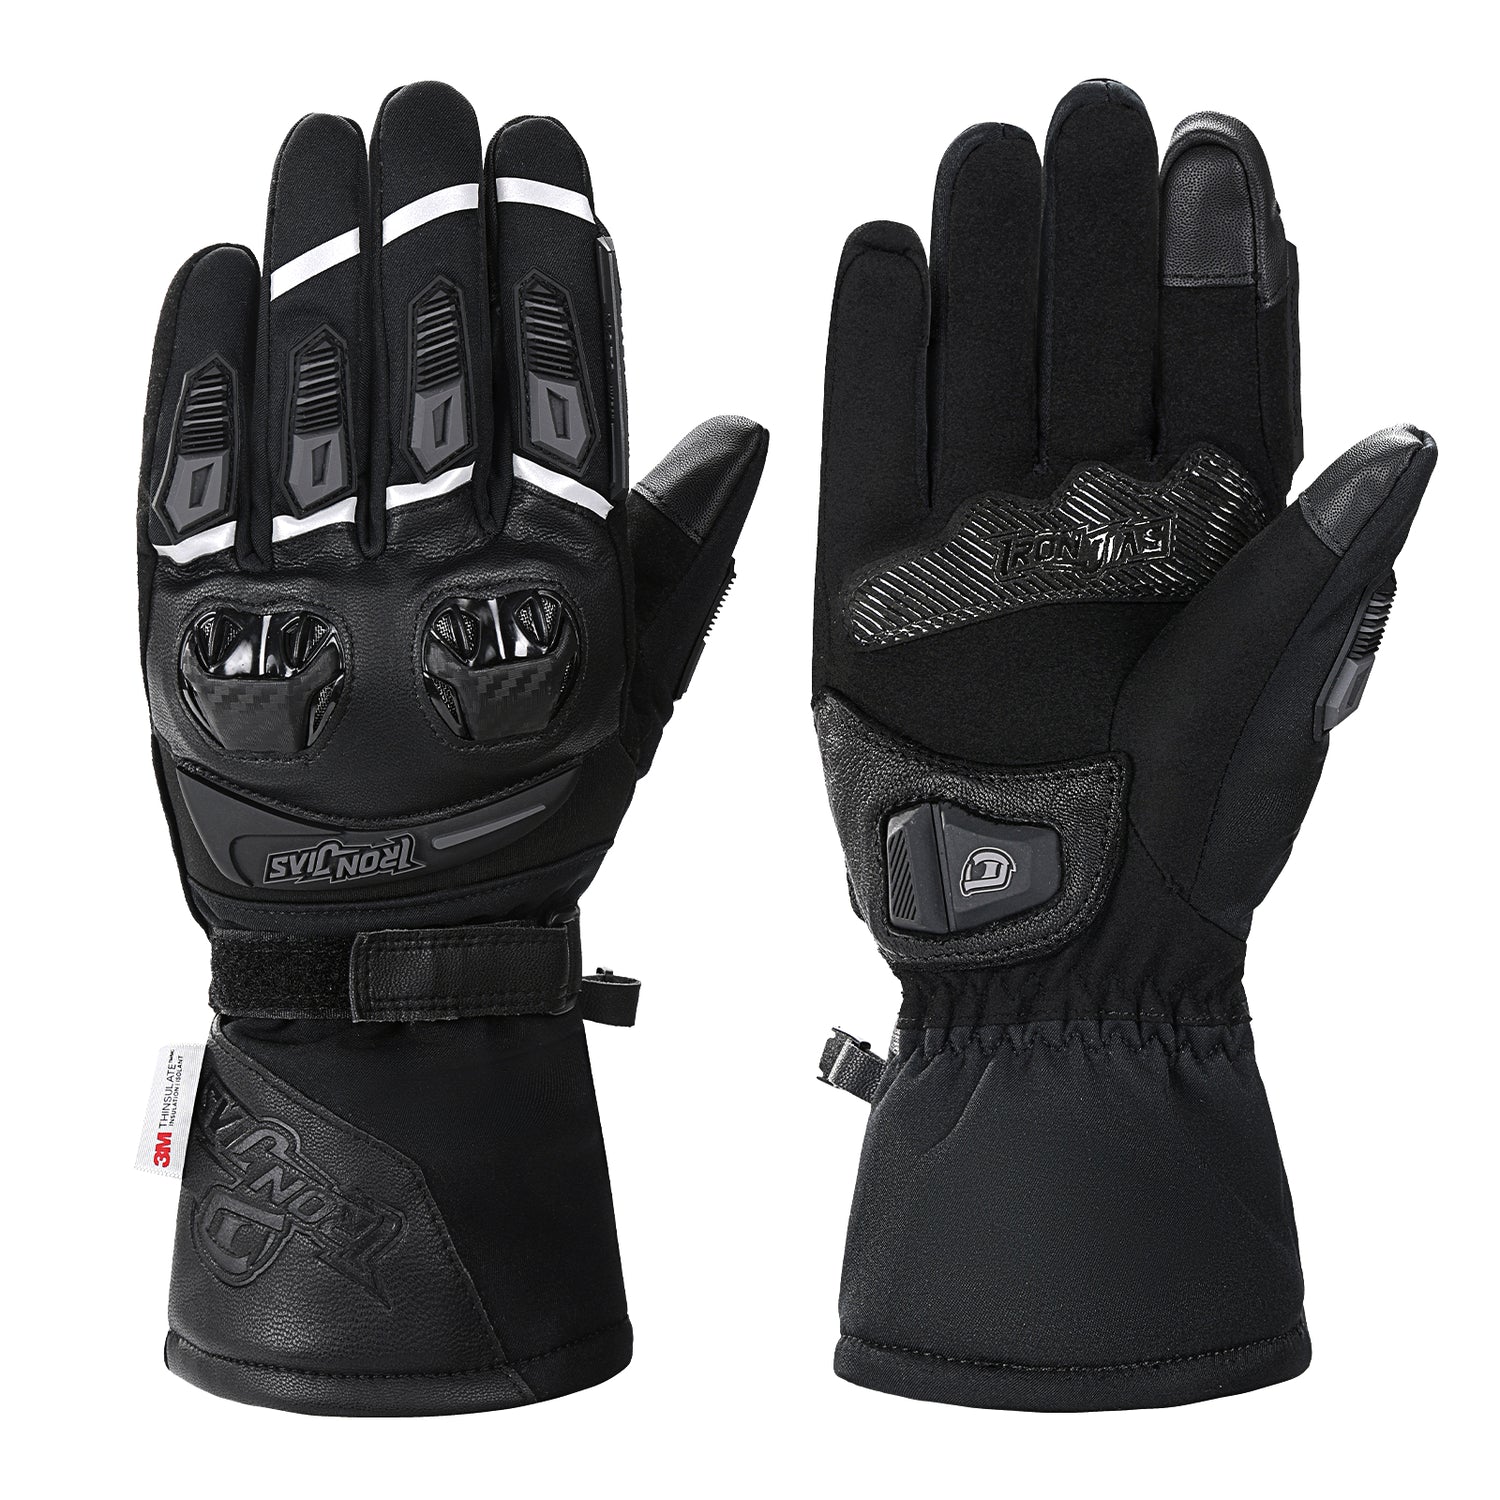 WarmShield Pro Motorcycle Gloves